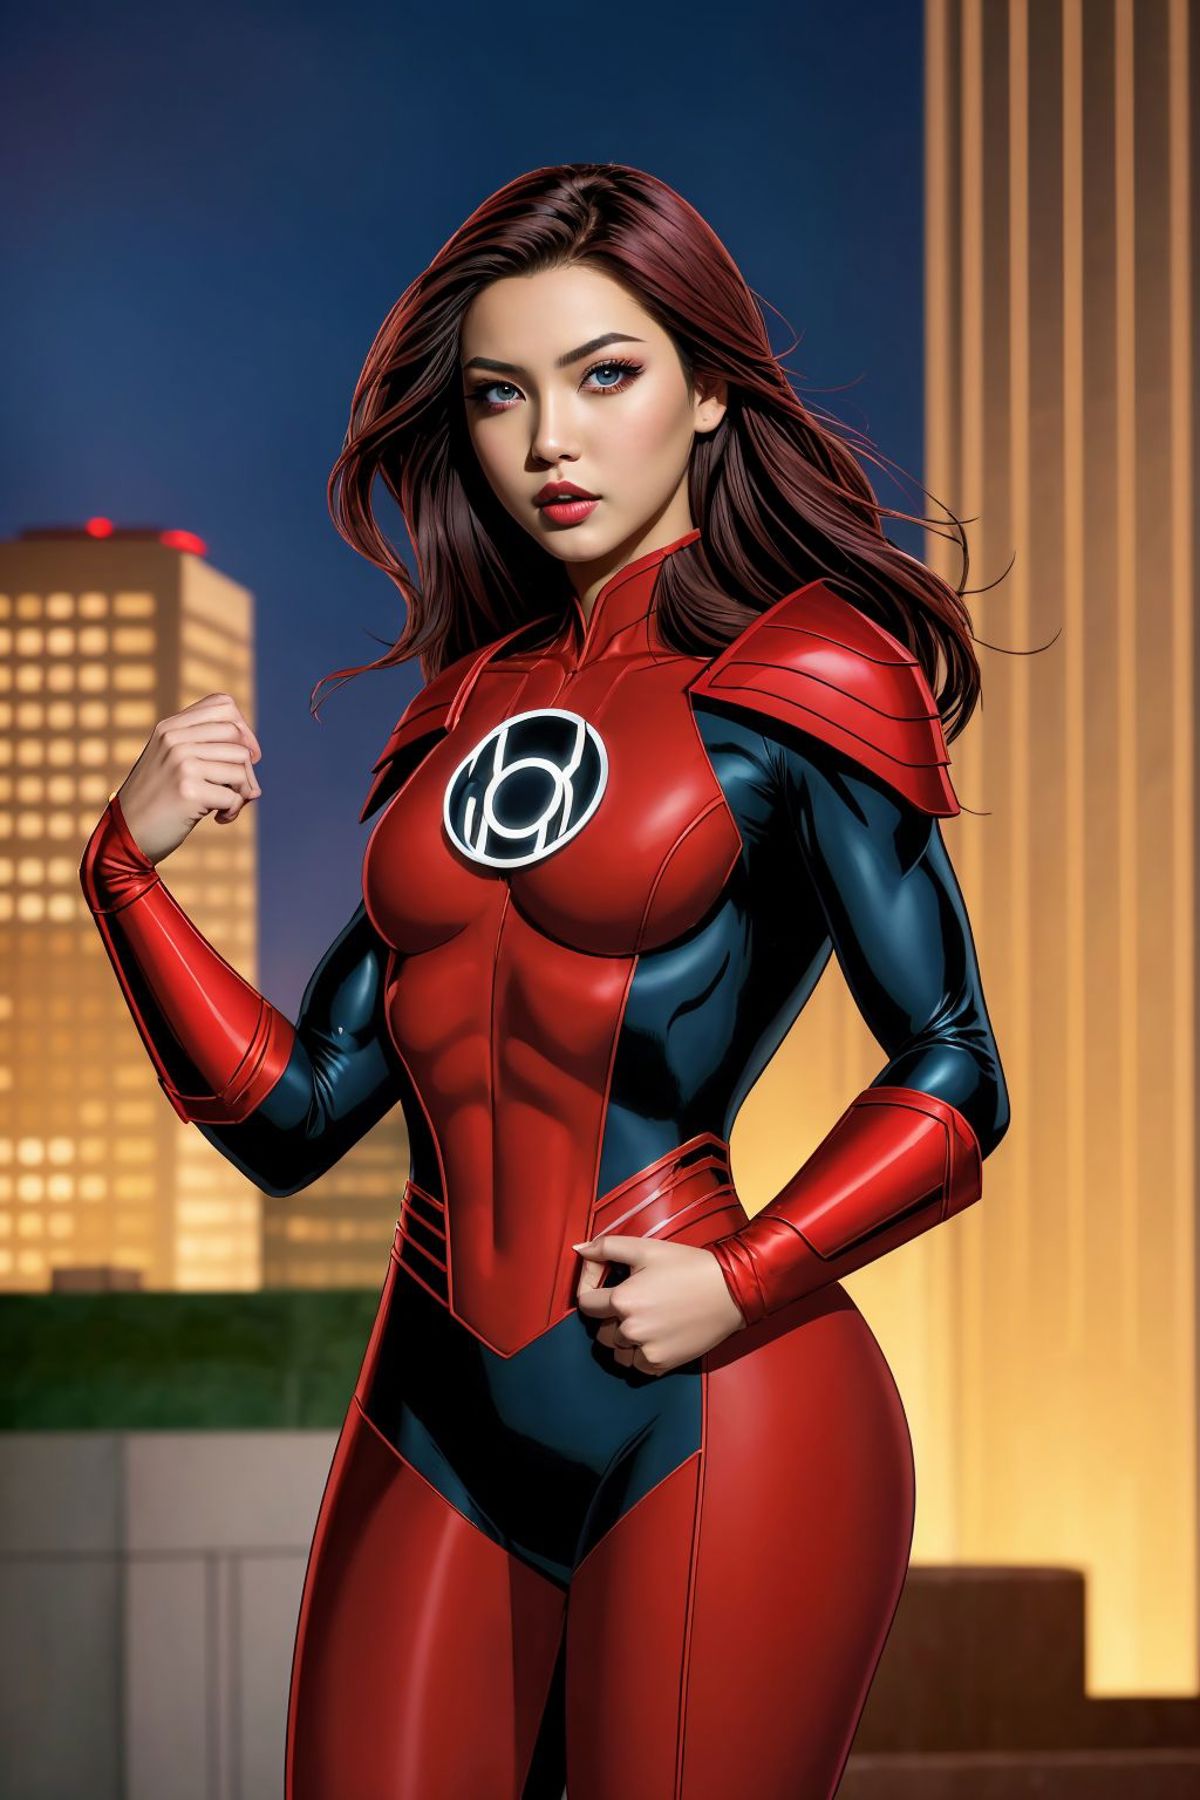 Red Lantern Costume (DC Comics) image by Montitto